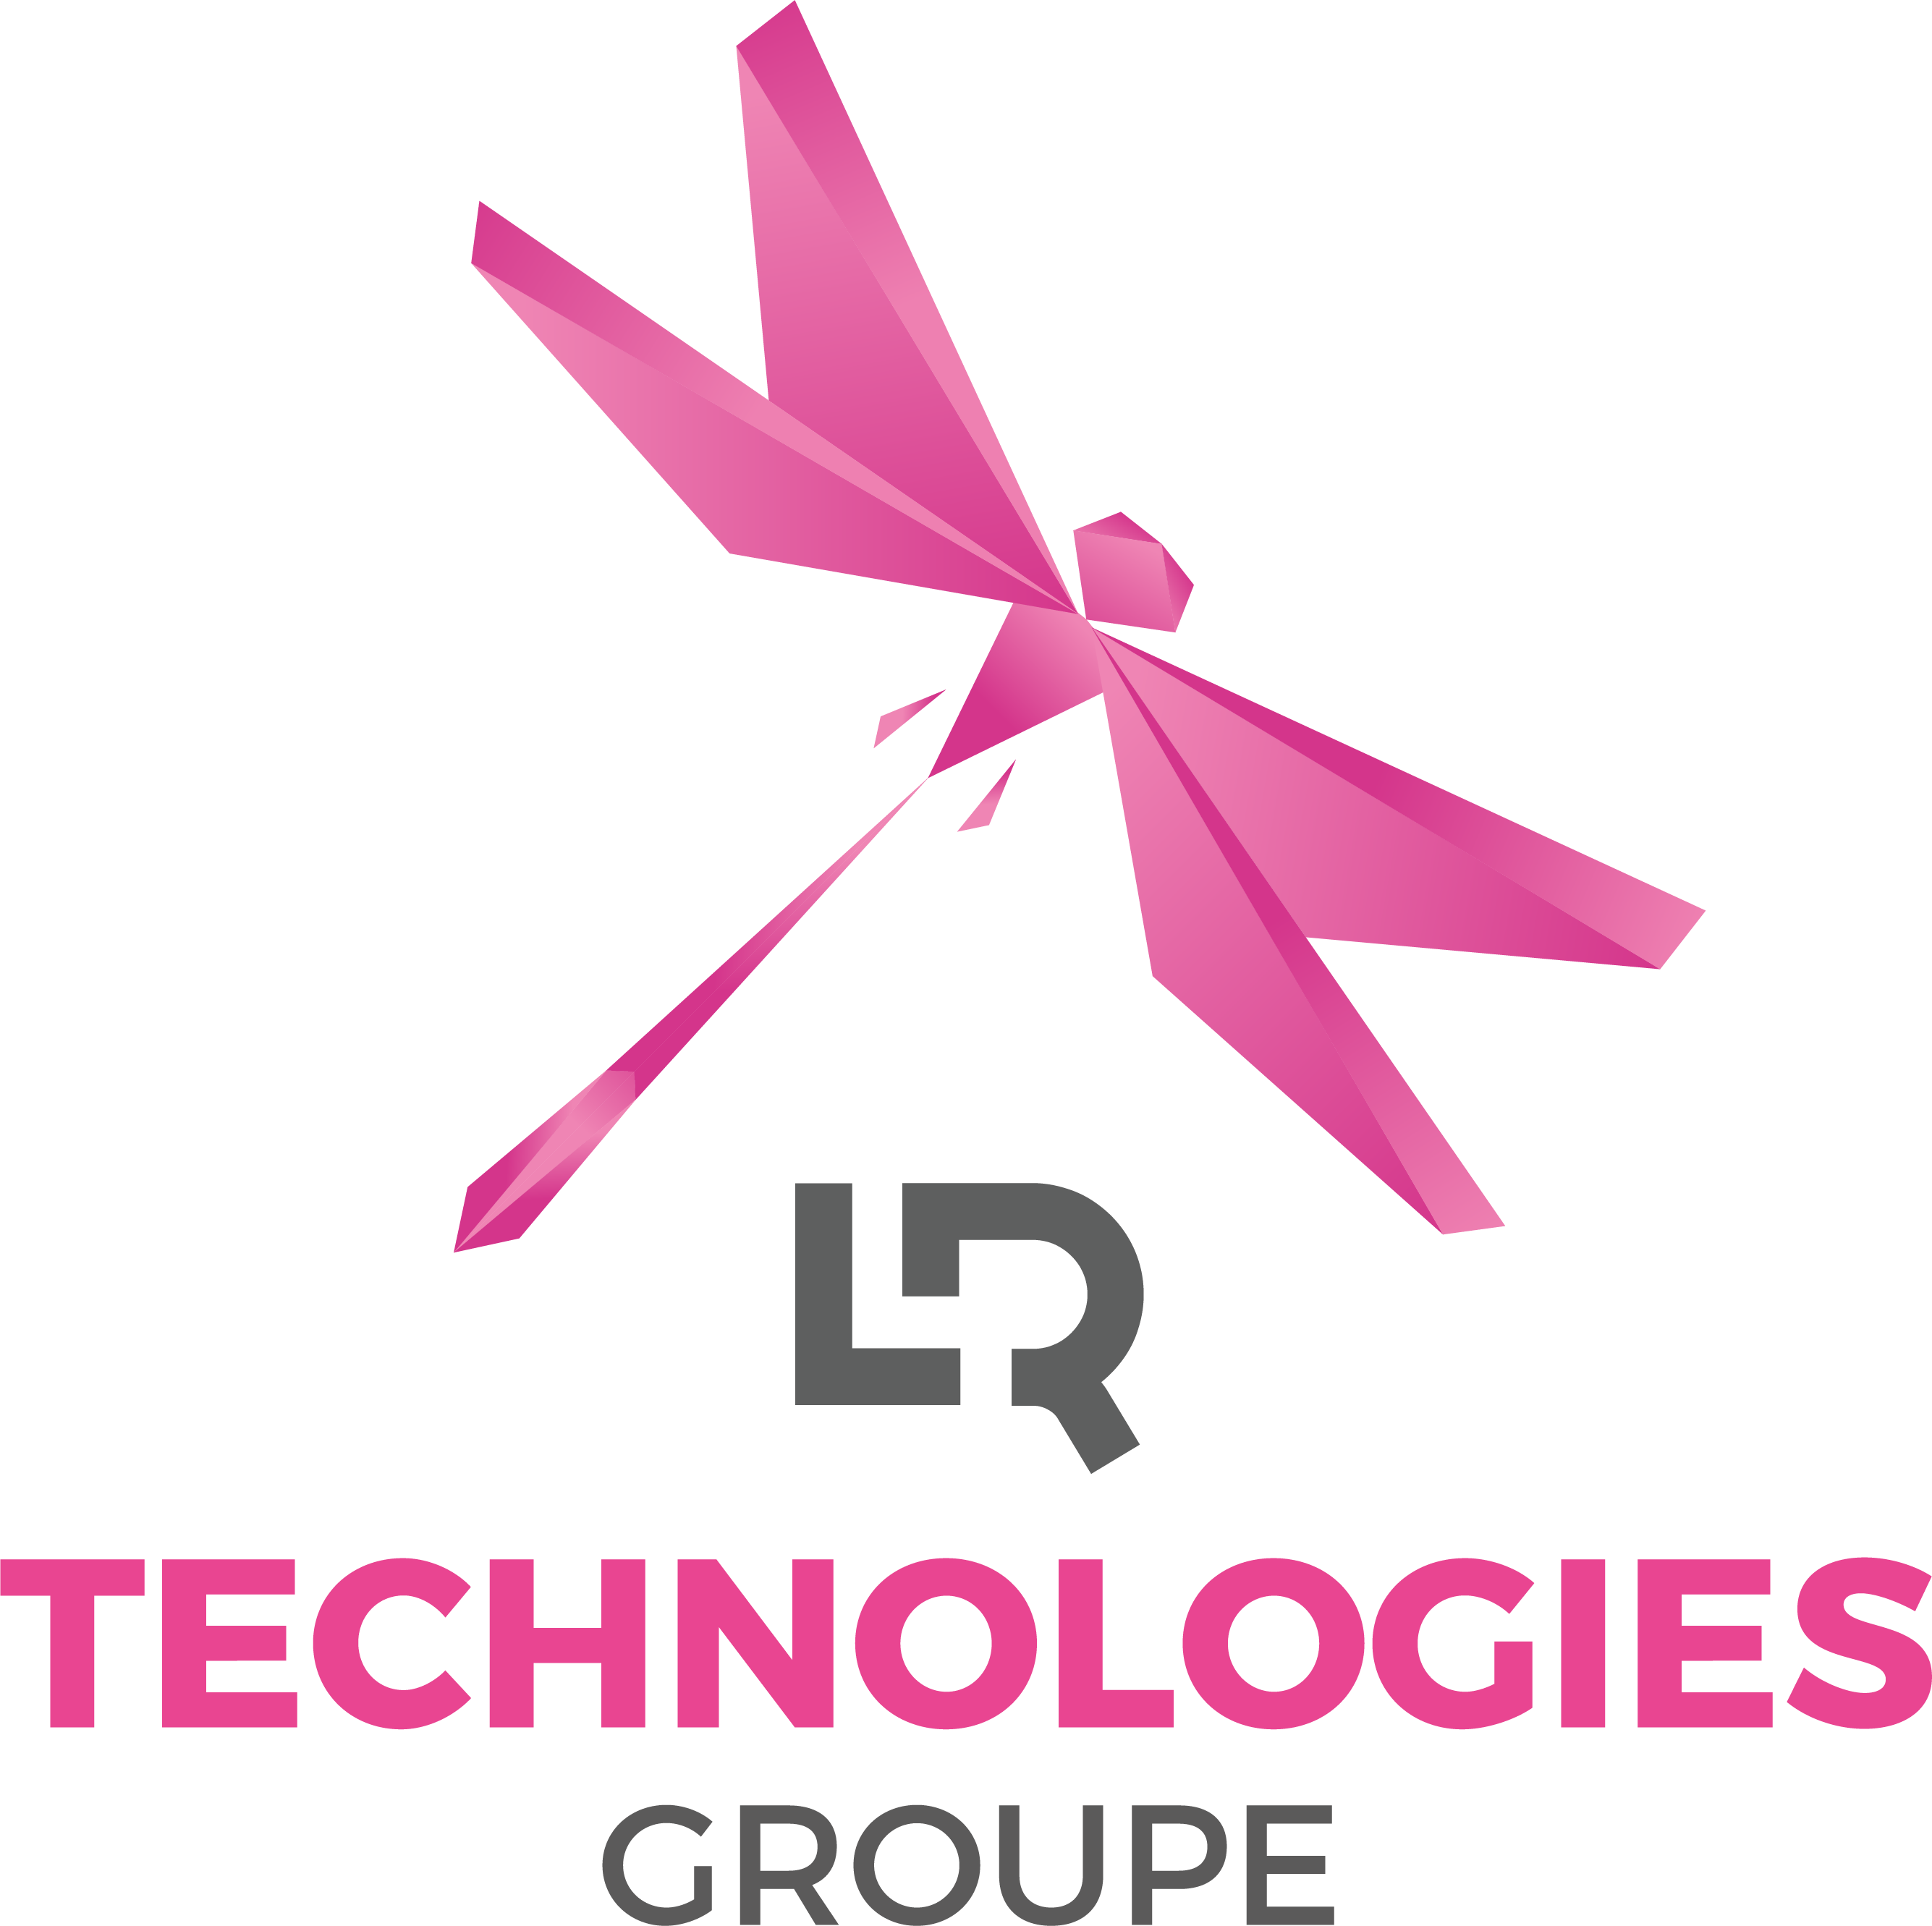 LR Technologies Groupe 